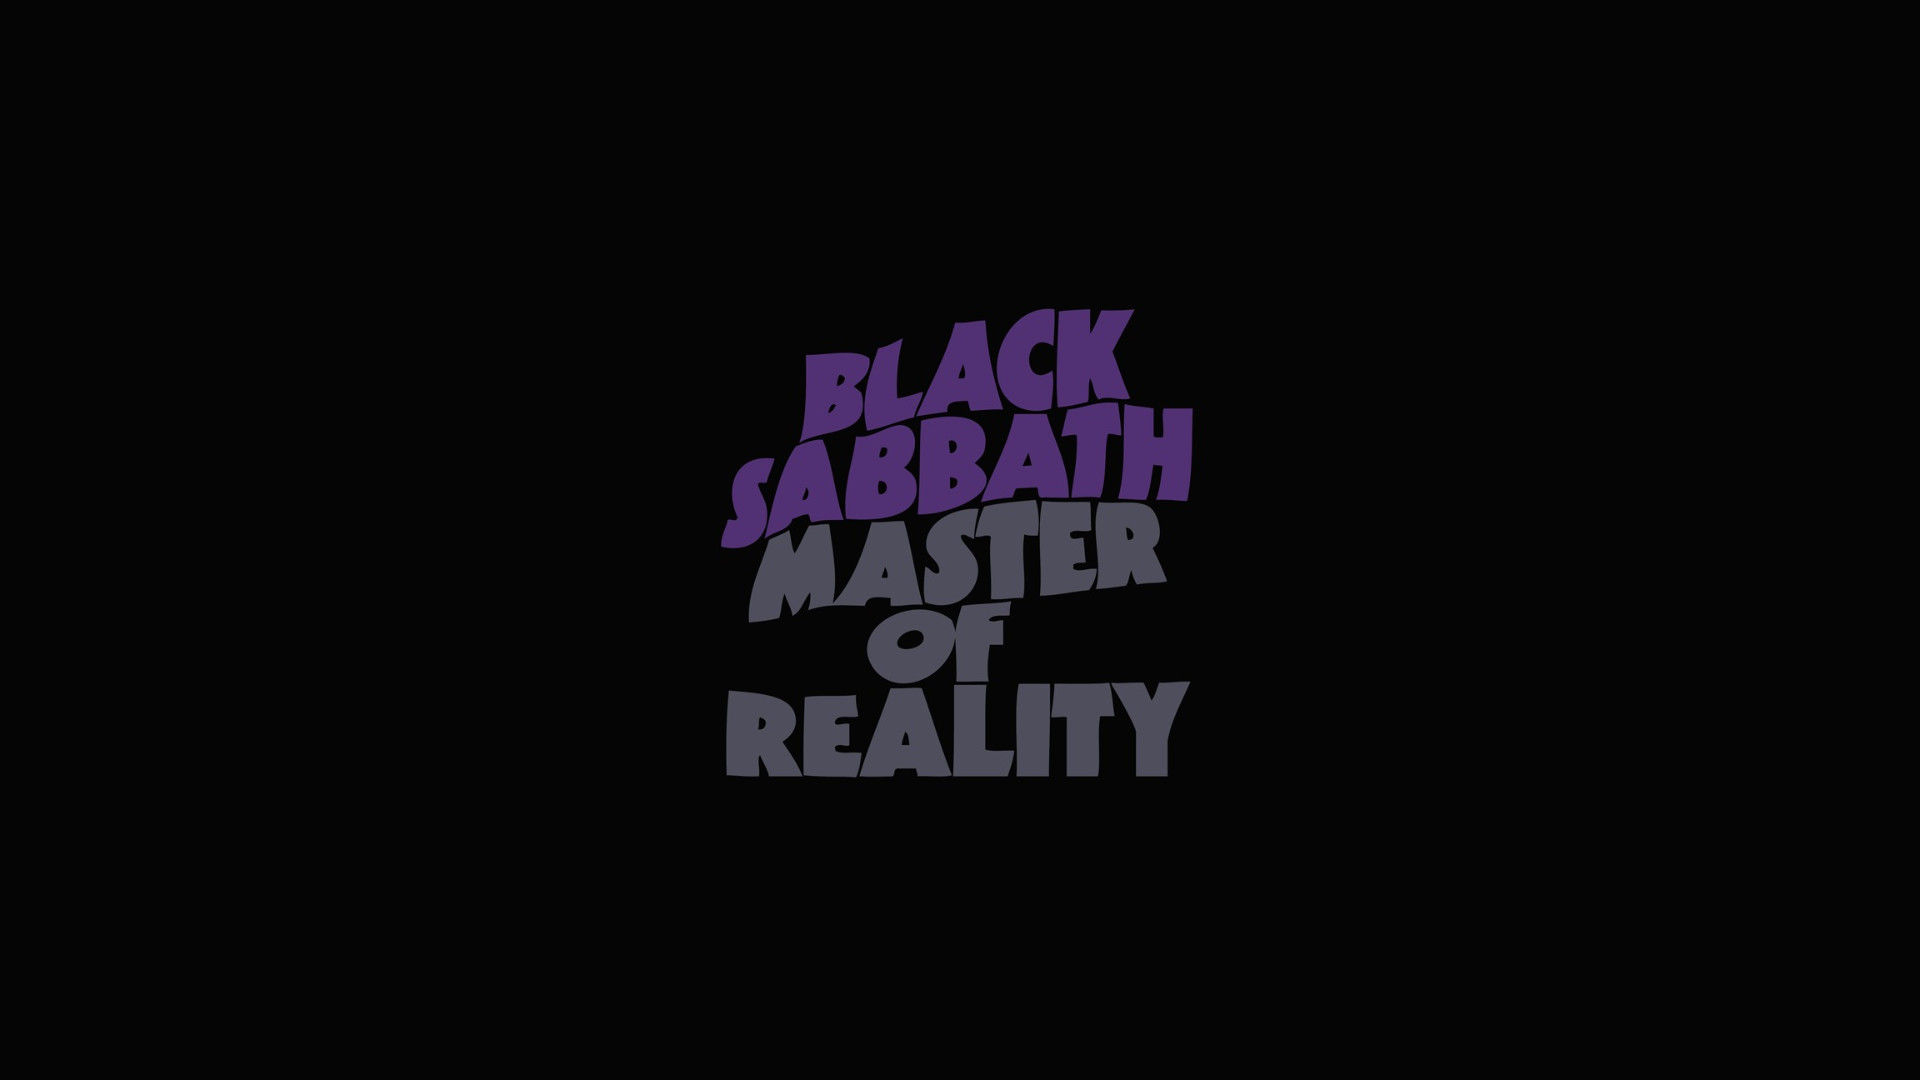 1920x1080 ... Black Sabbath Vol 4 Wallpaper For Desktop Master Of Reality Wallpaper  For Computer Background ...